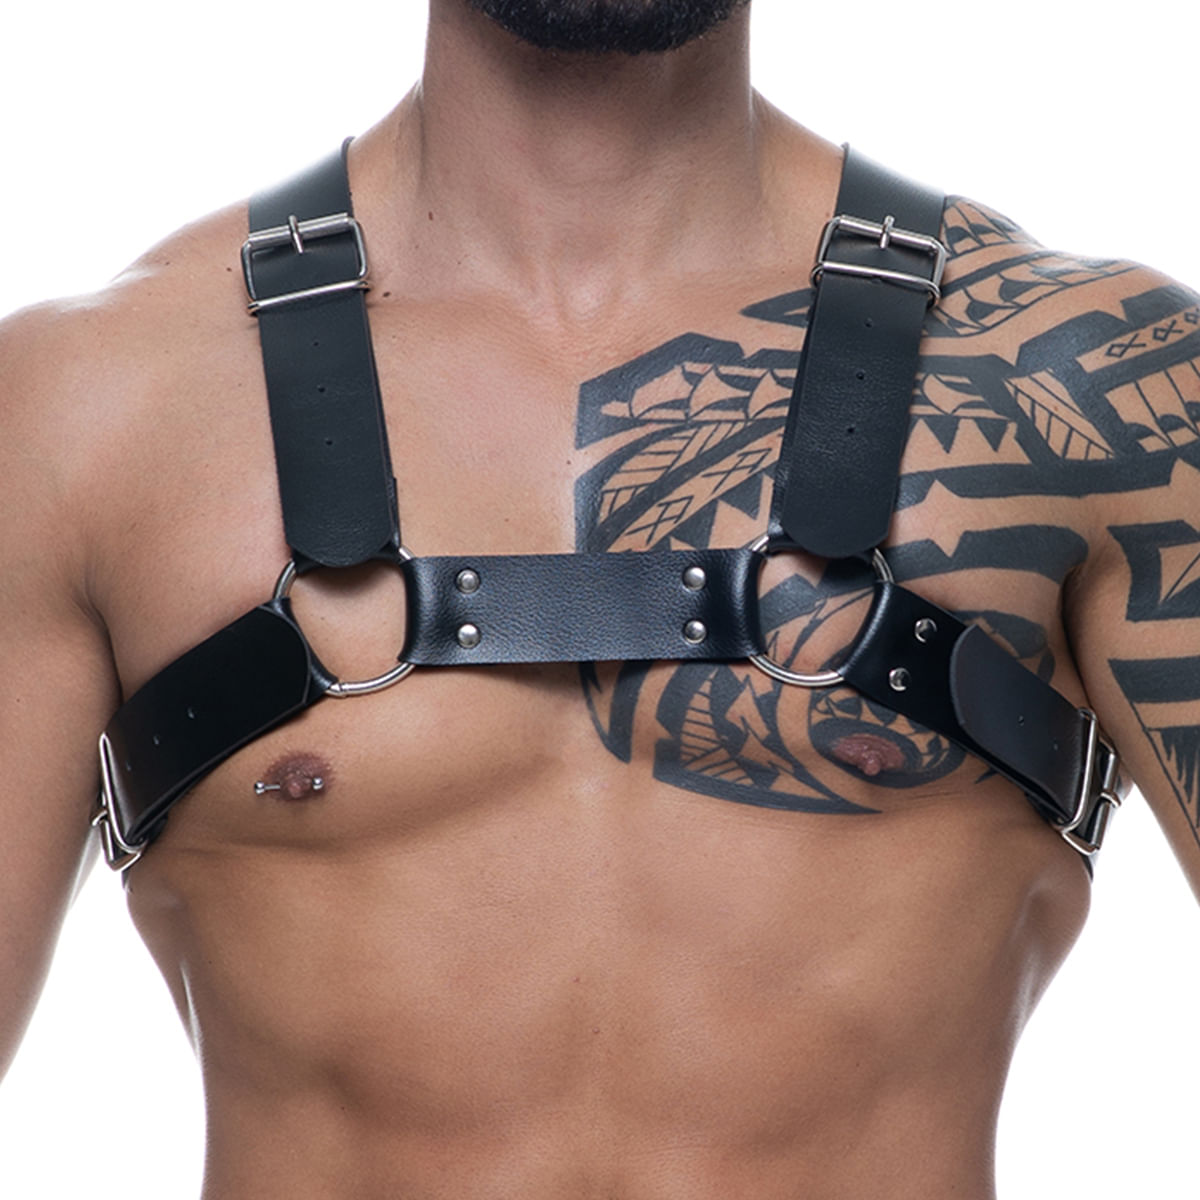 Harness Premium Arreio Masculino em Couro SD Clothing